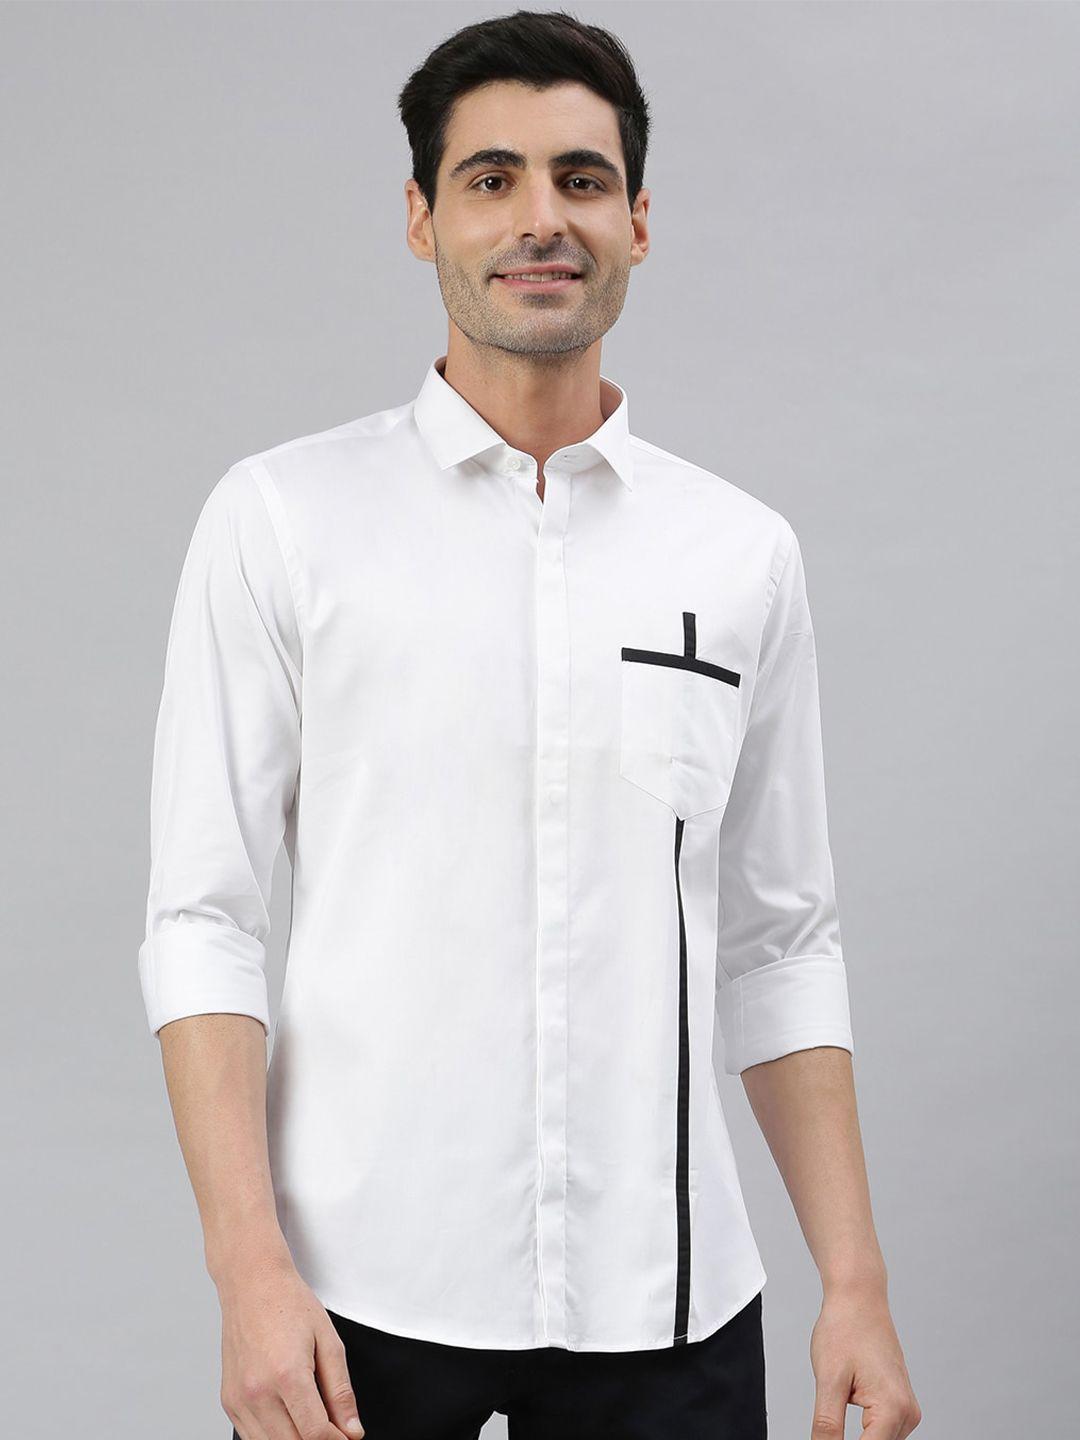 mr button men white & black smart slim fit casual shirt